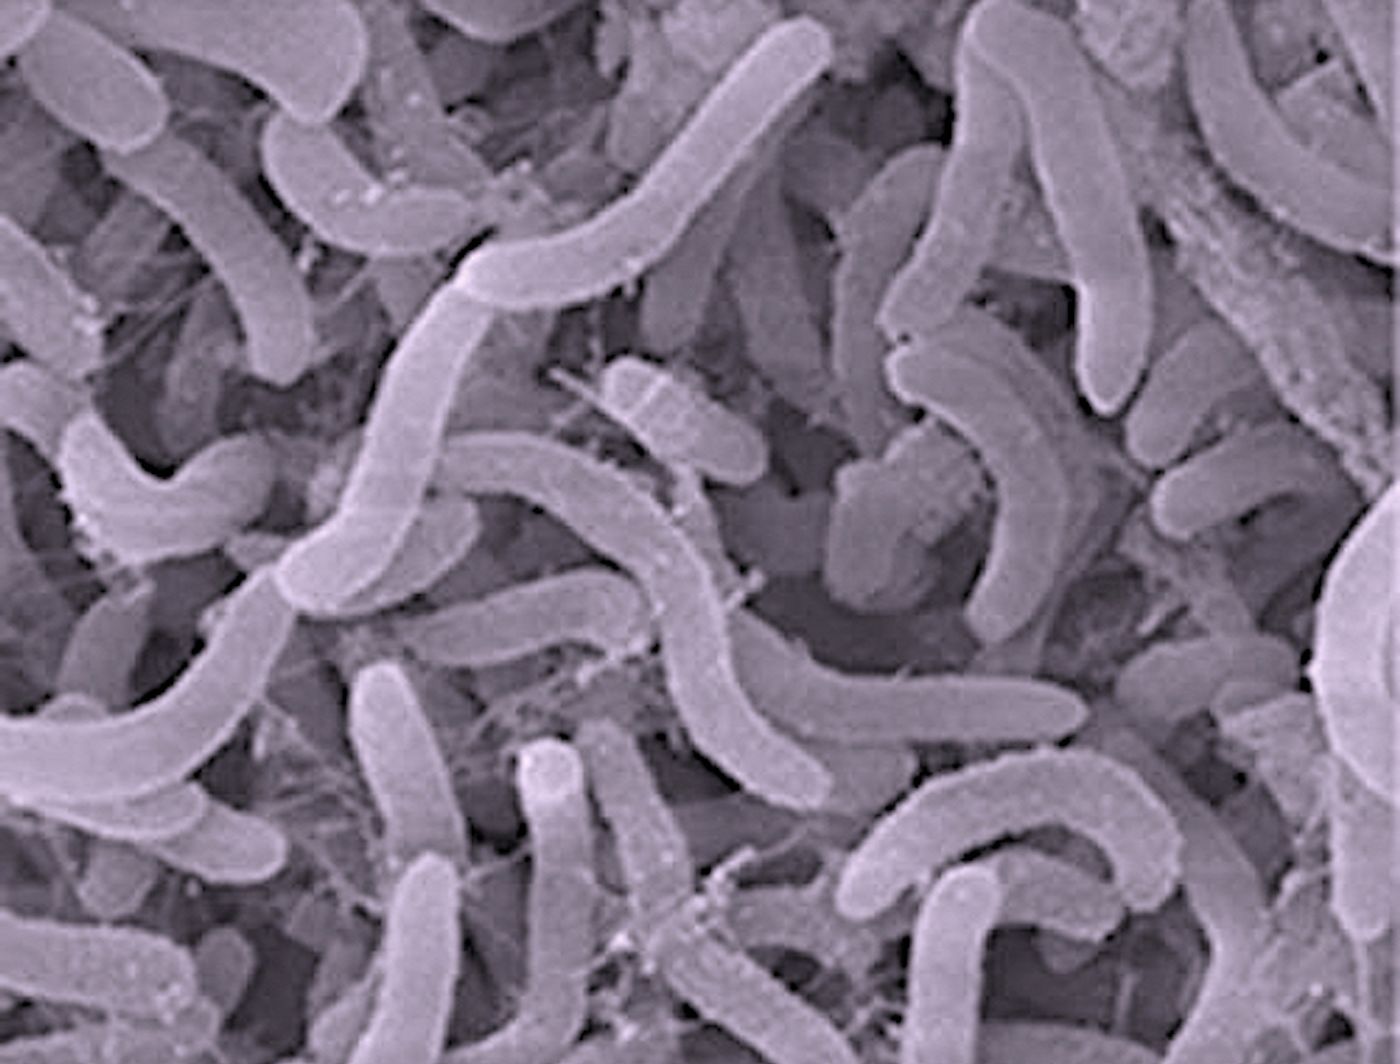 Pelagibacter / Credit: NOAA / Ocean Exploration and Research